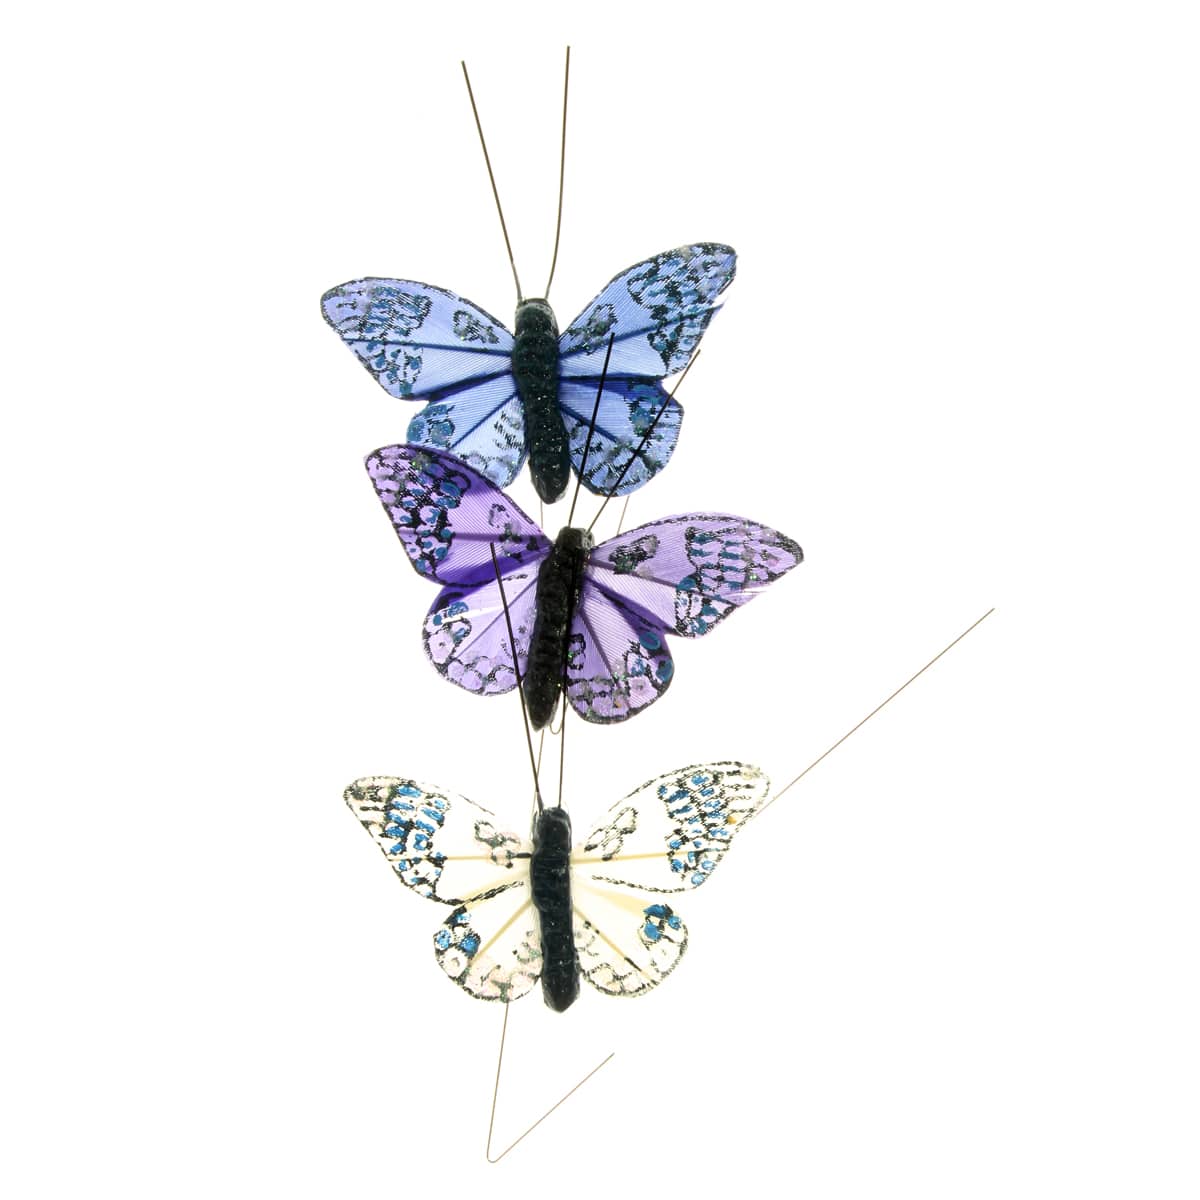 Ashland Mini Butterflies - Each